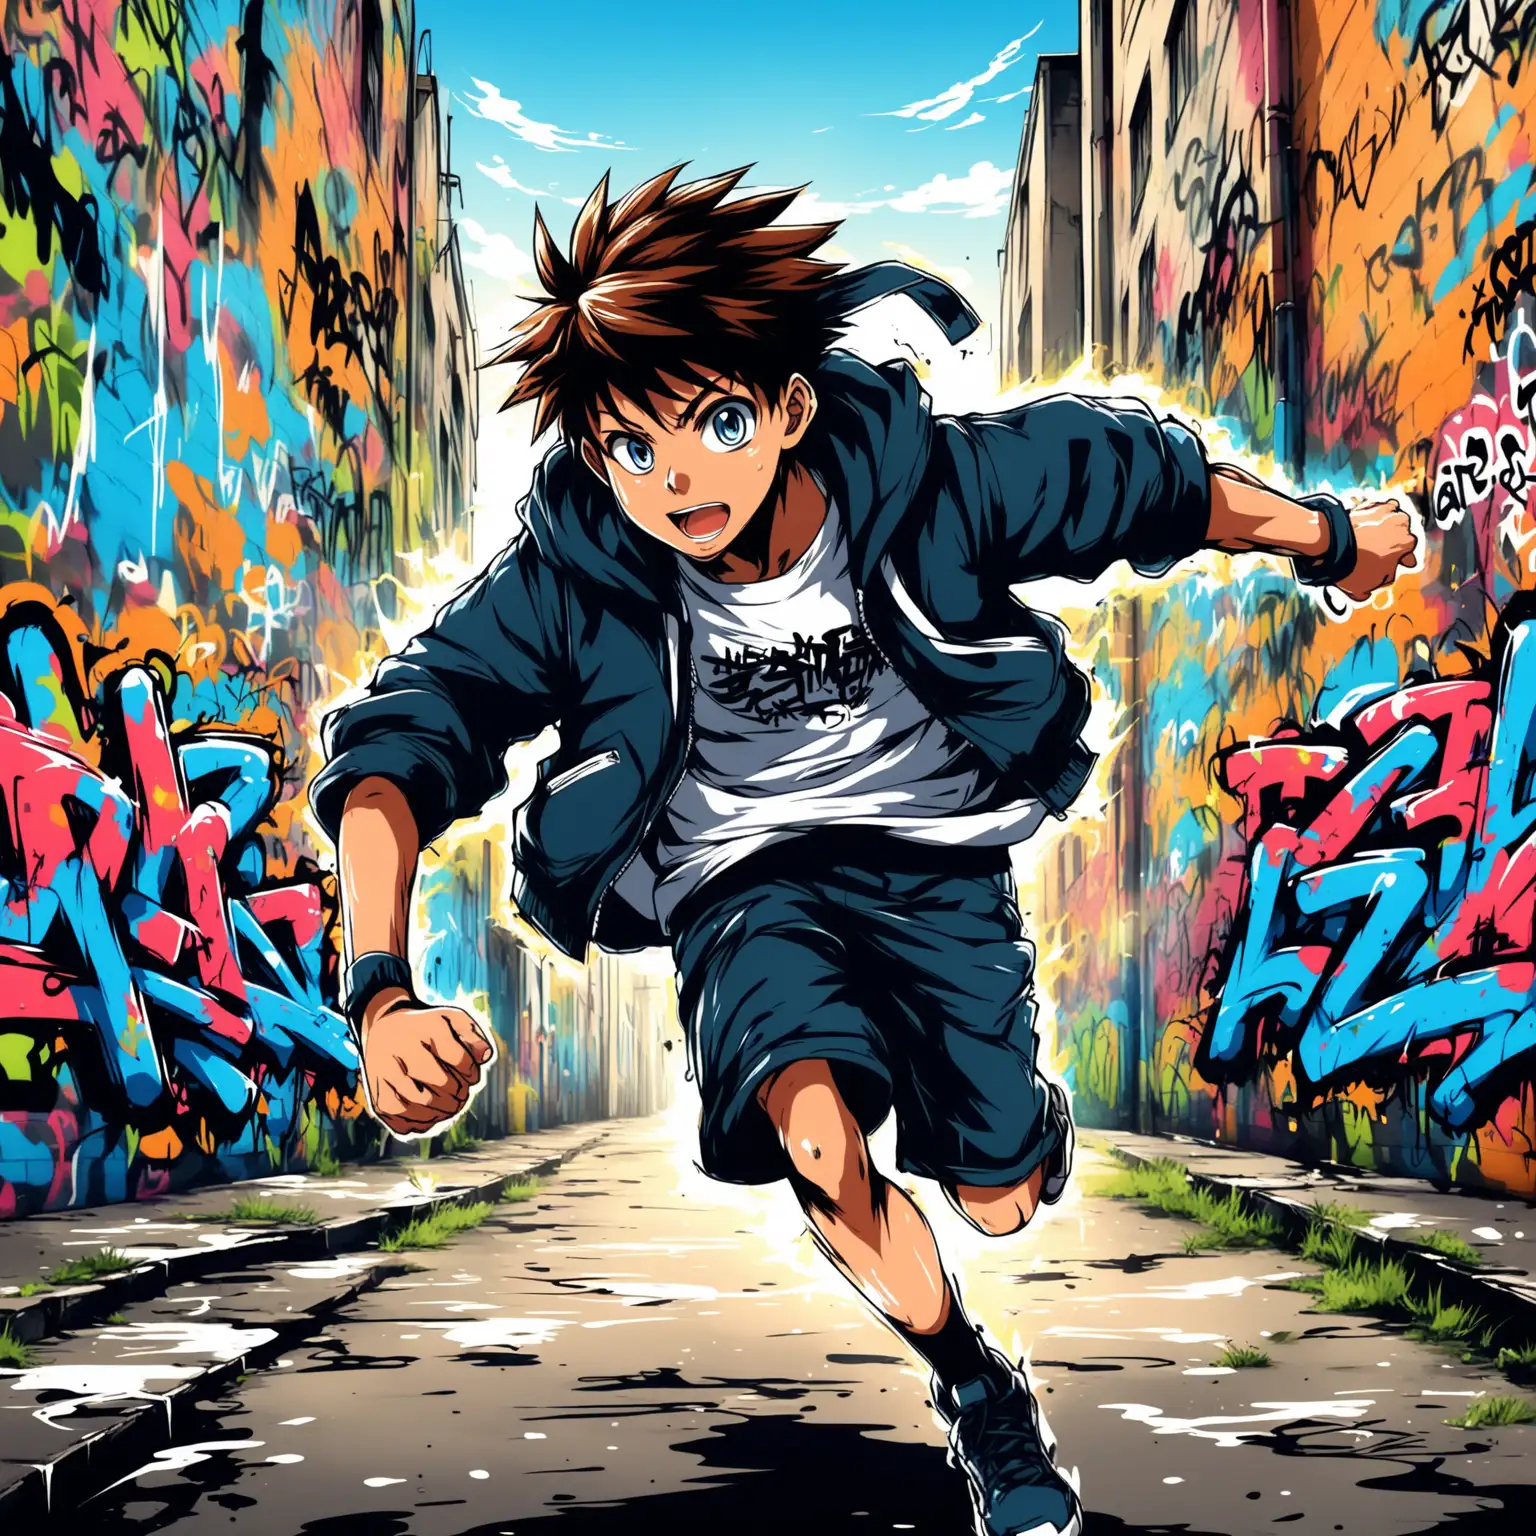 Dynamic Anime Boy Running in Vibrant Graffiti Style